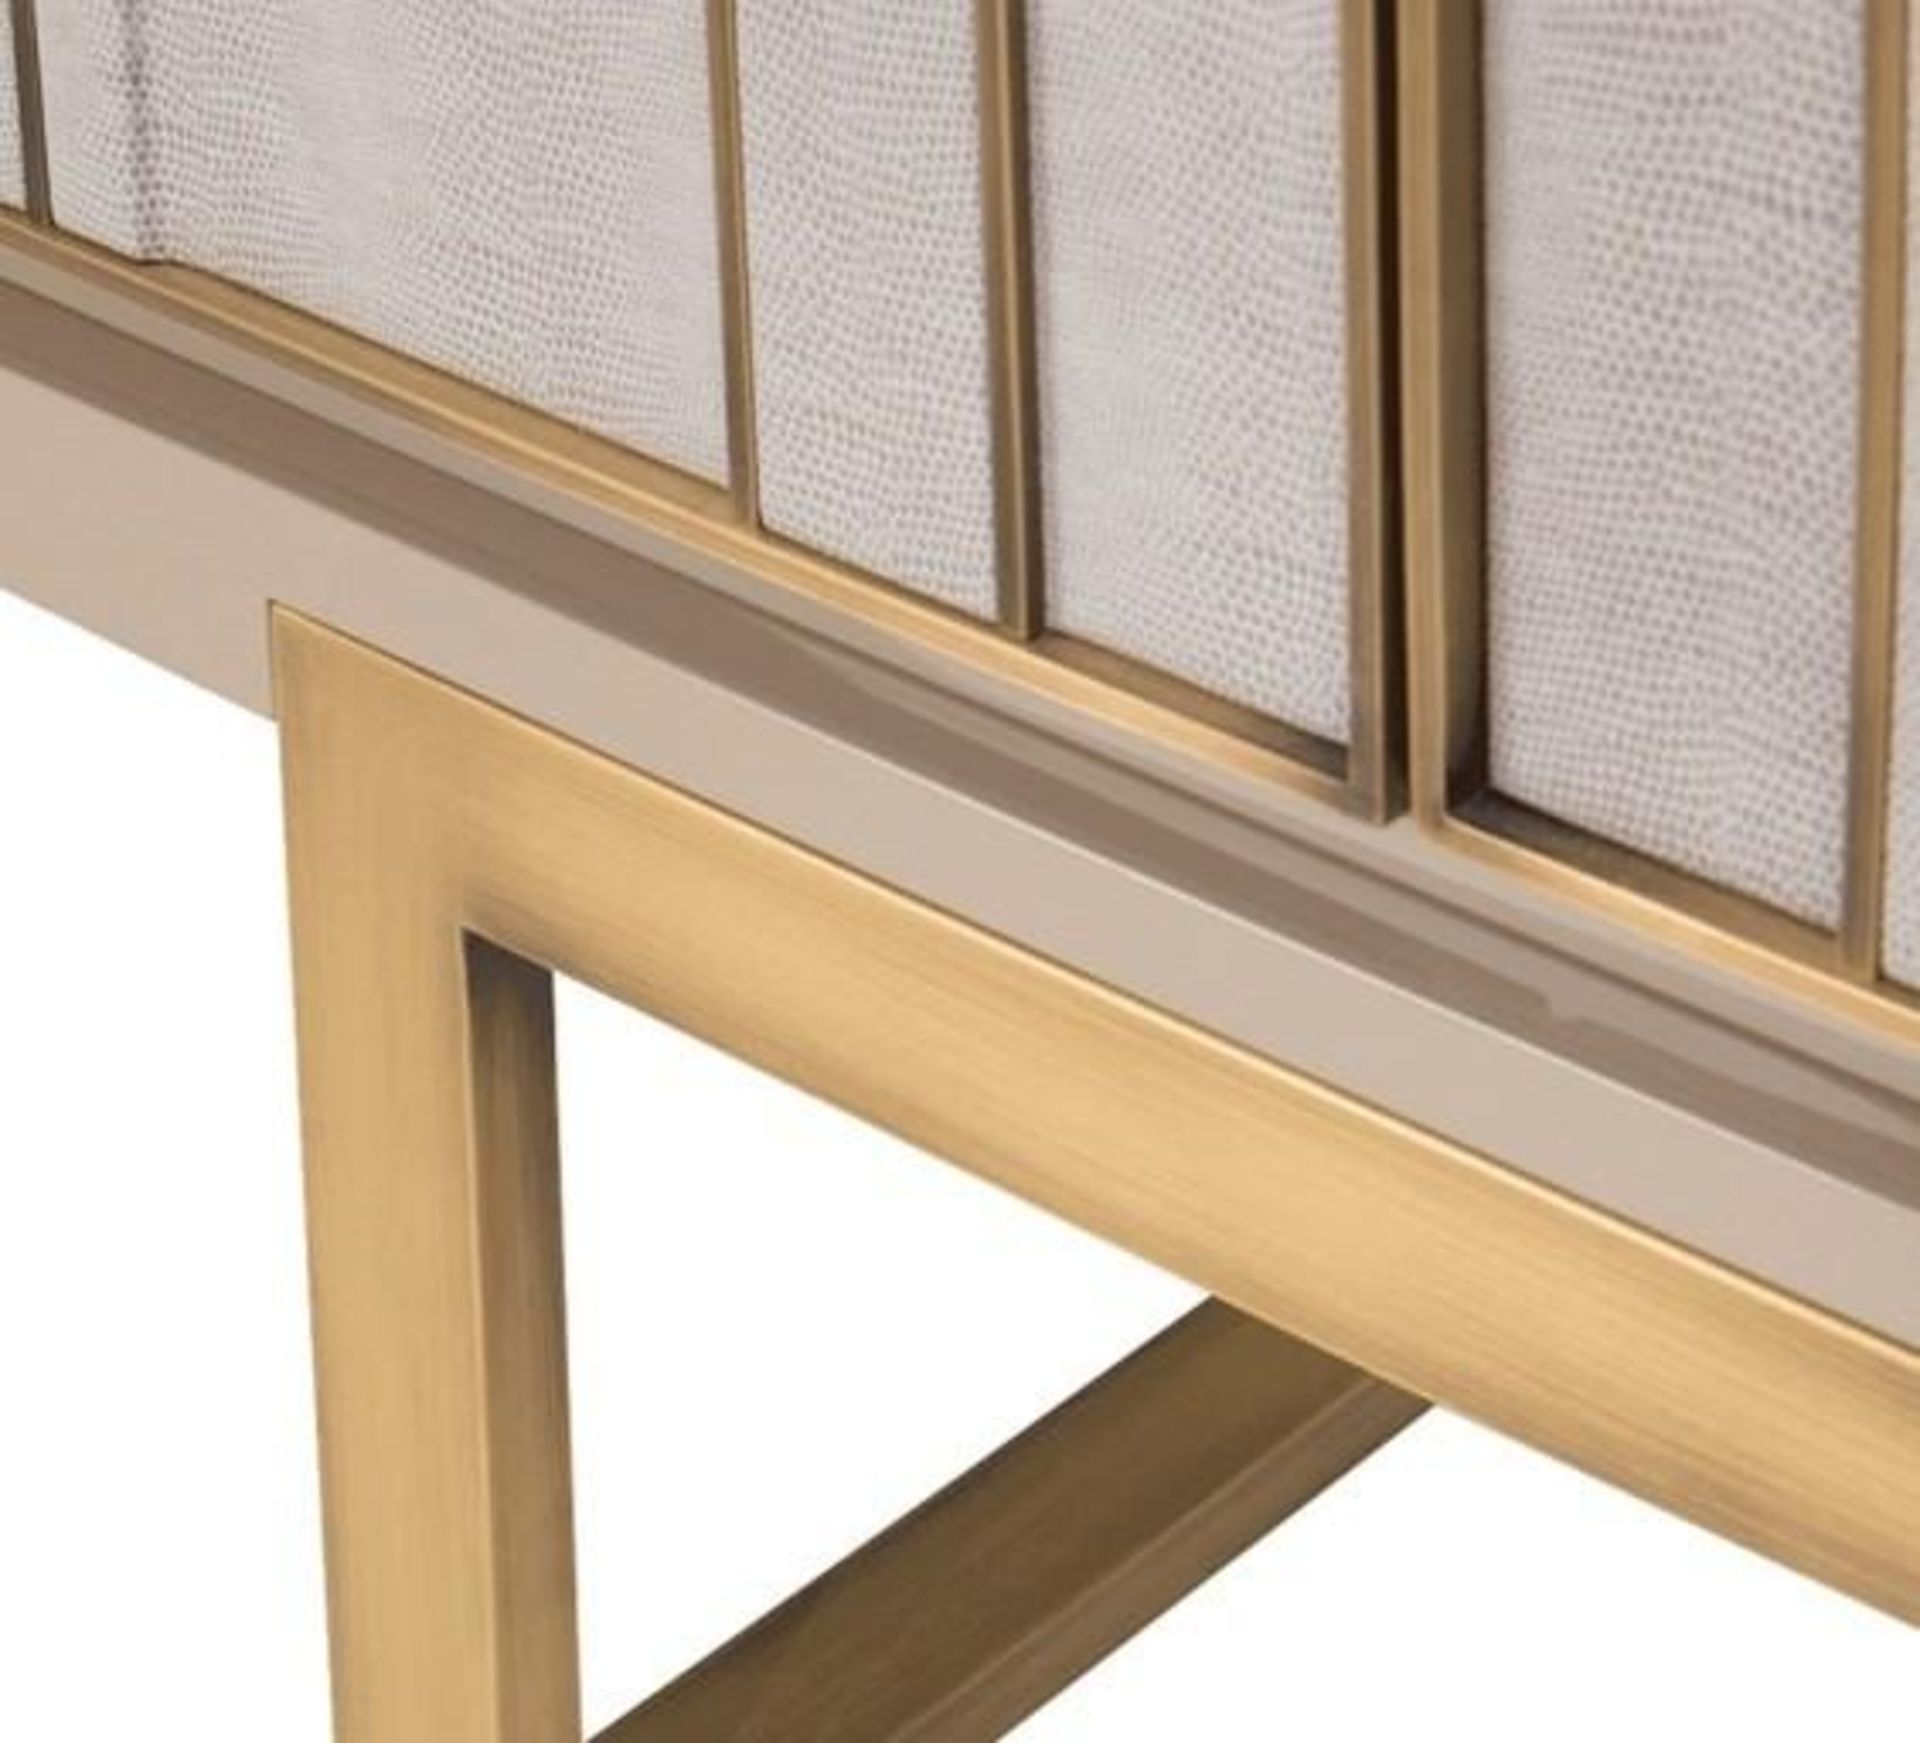 1 x FRATO 'Ascot' Designer Sideboard - Dimensions: W170 x D50 x H90cm - Original Price £3,249 - Ref: - Image 5 of 13